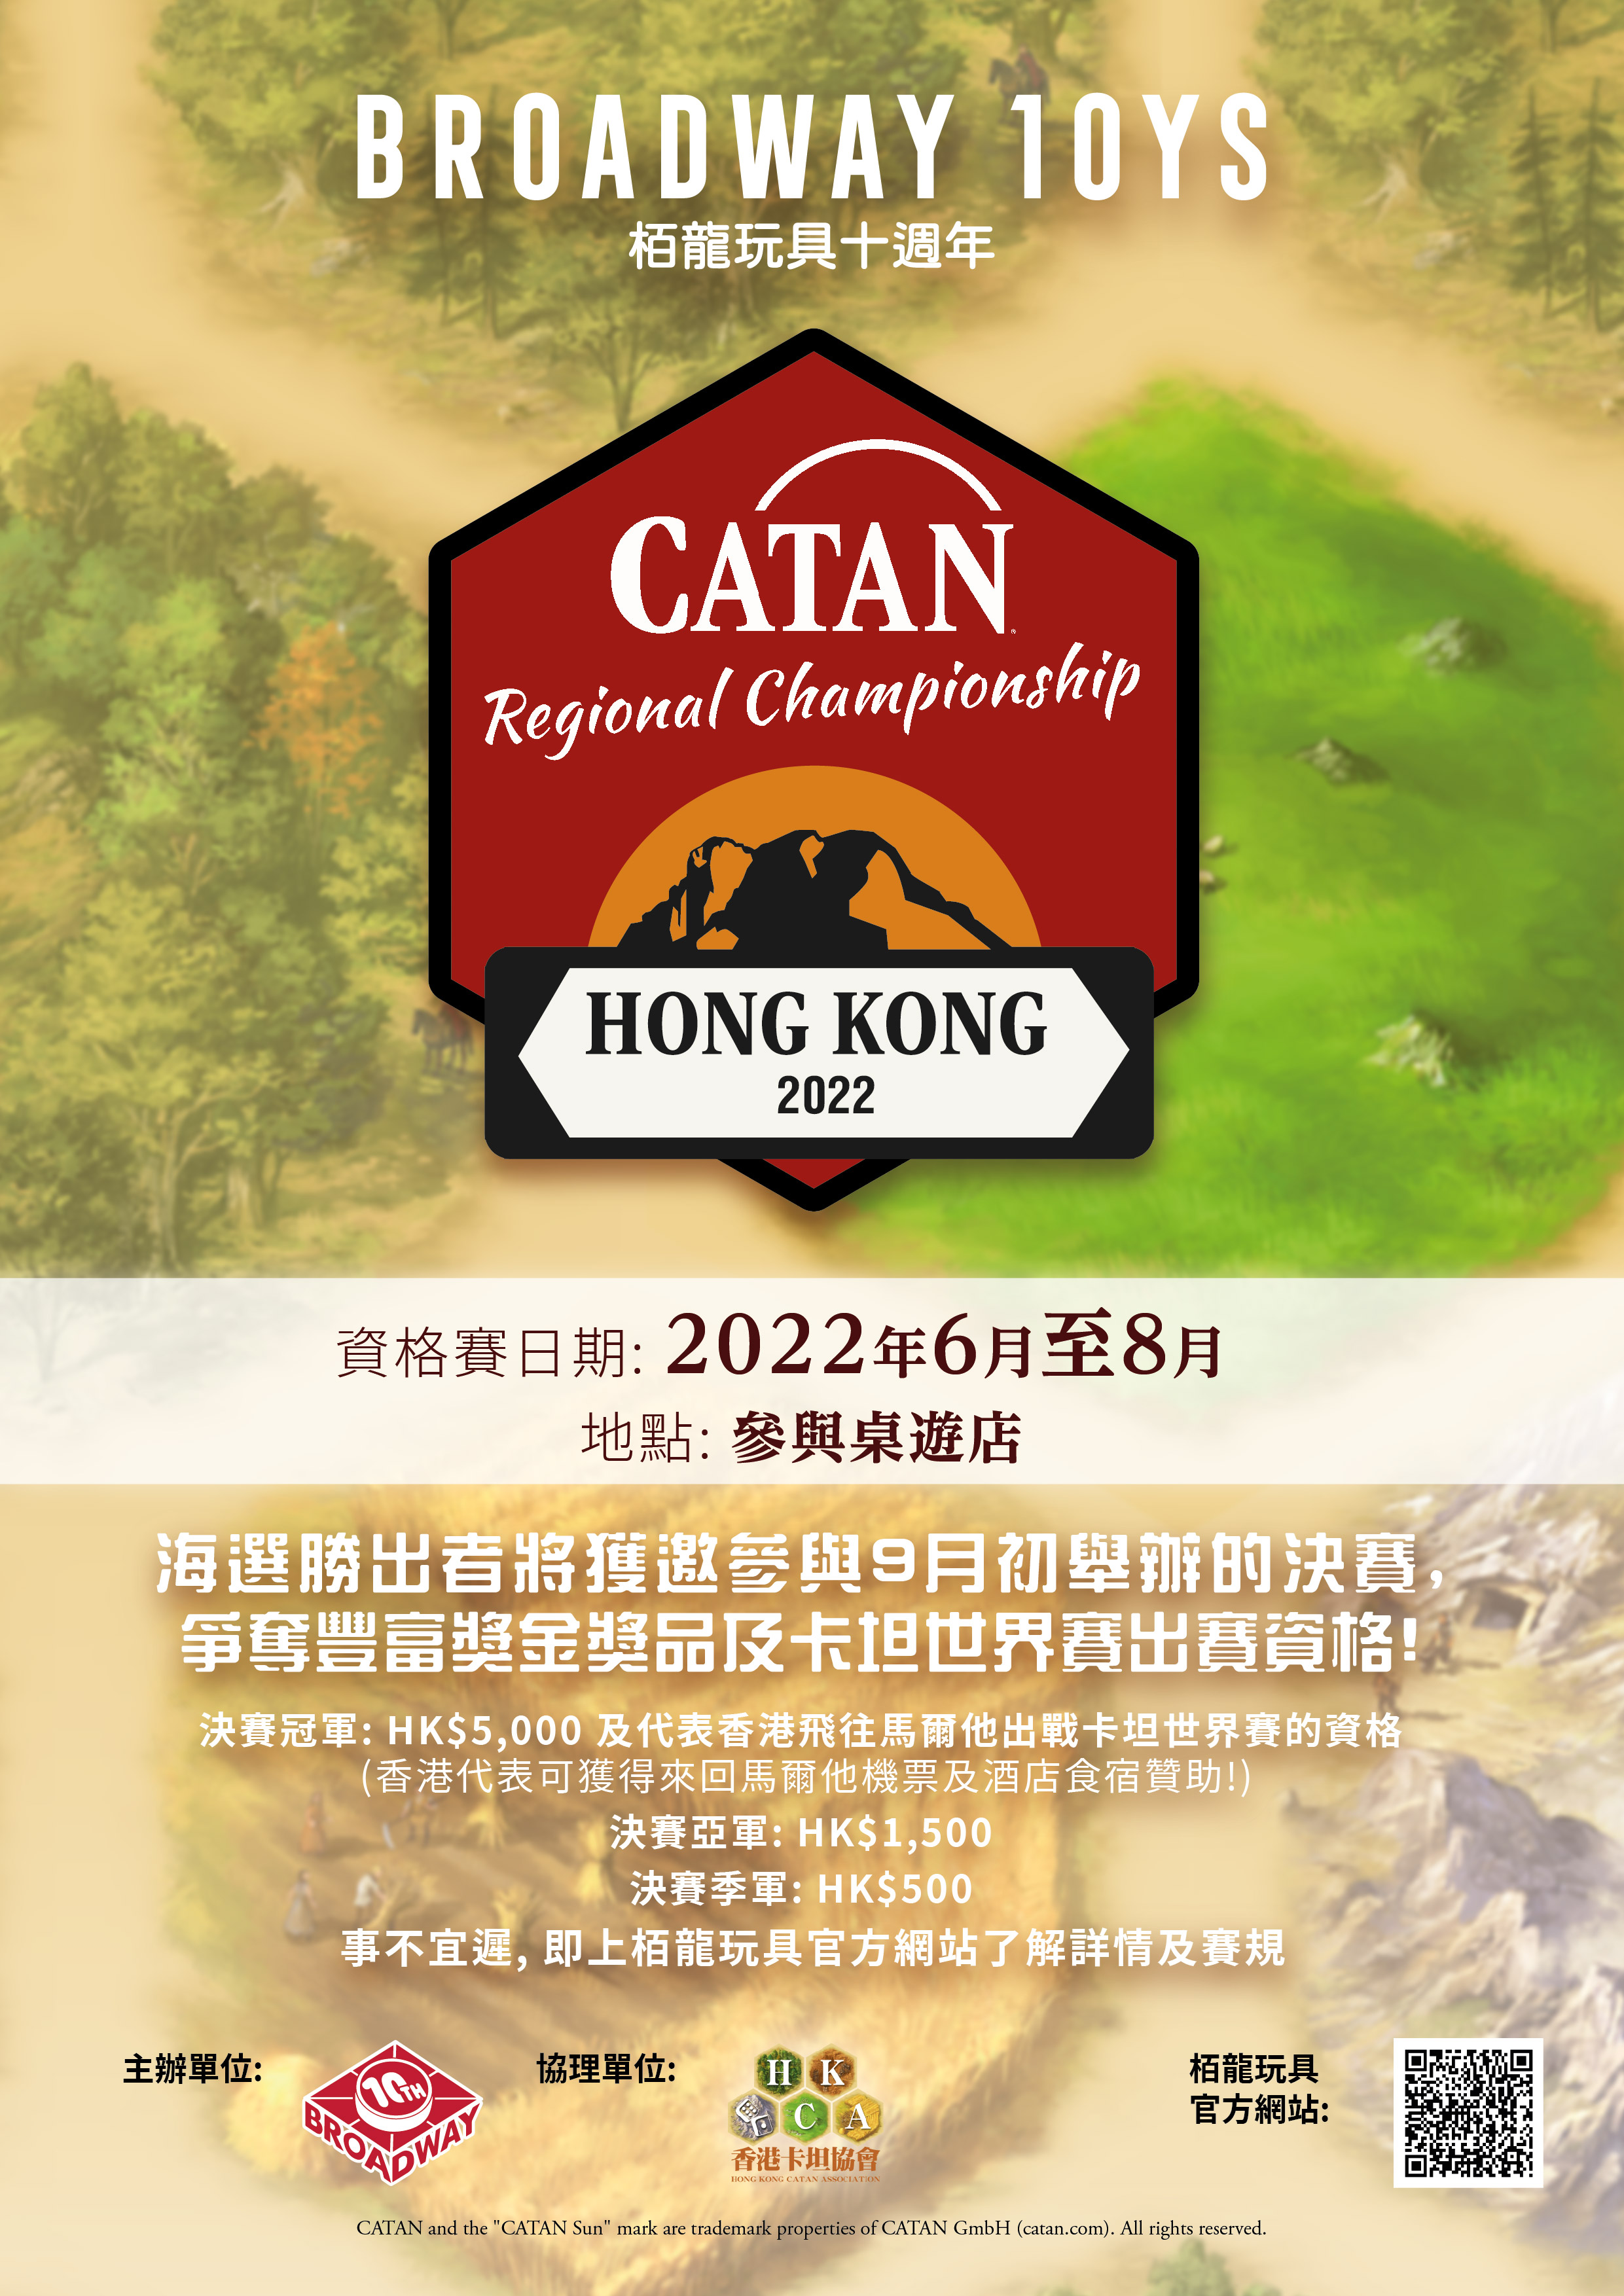 http://broadwaygames.com.hk/wp-content/uploads/2022/05/Catan_poster_V11-1.jpg